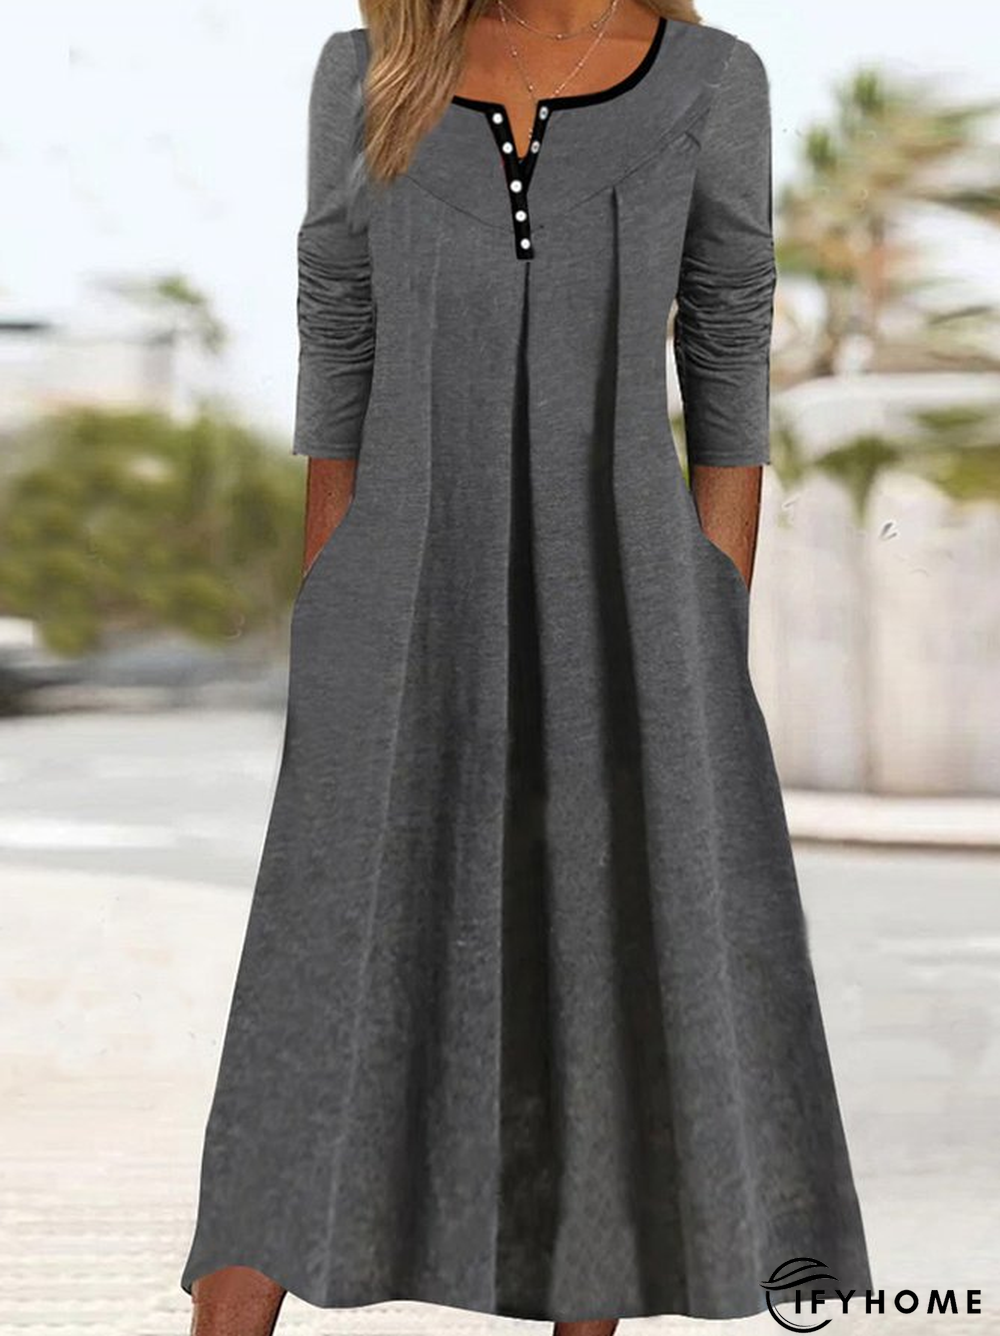 Plus Size Plain Casual Jersey Dress | IFYHOME